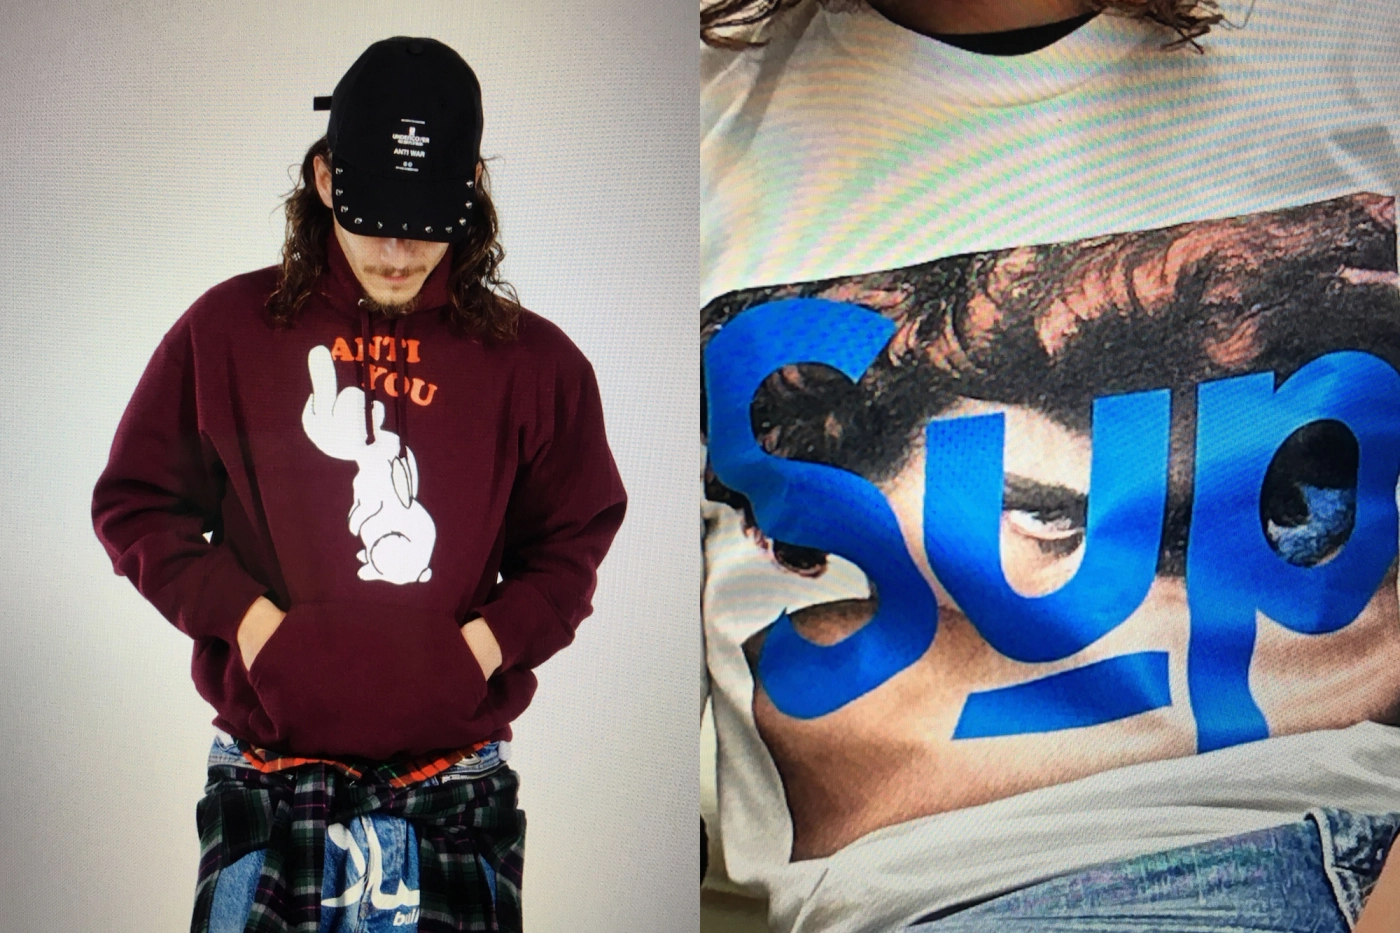 Supreme®/UNDERCOVER Anti You Hooded Sweatshirt